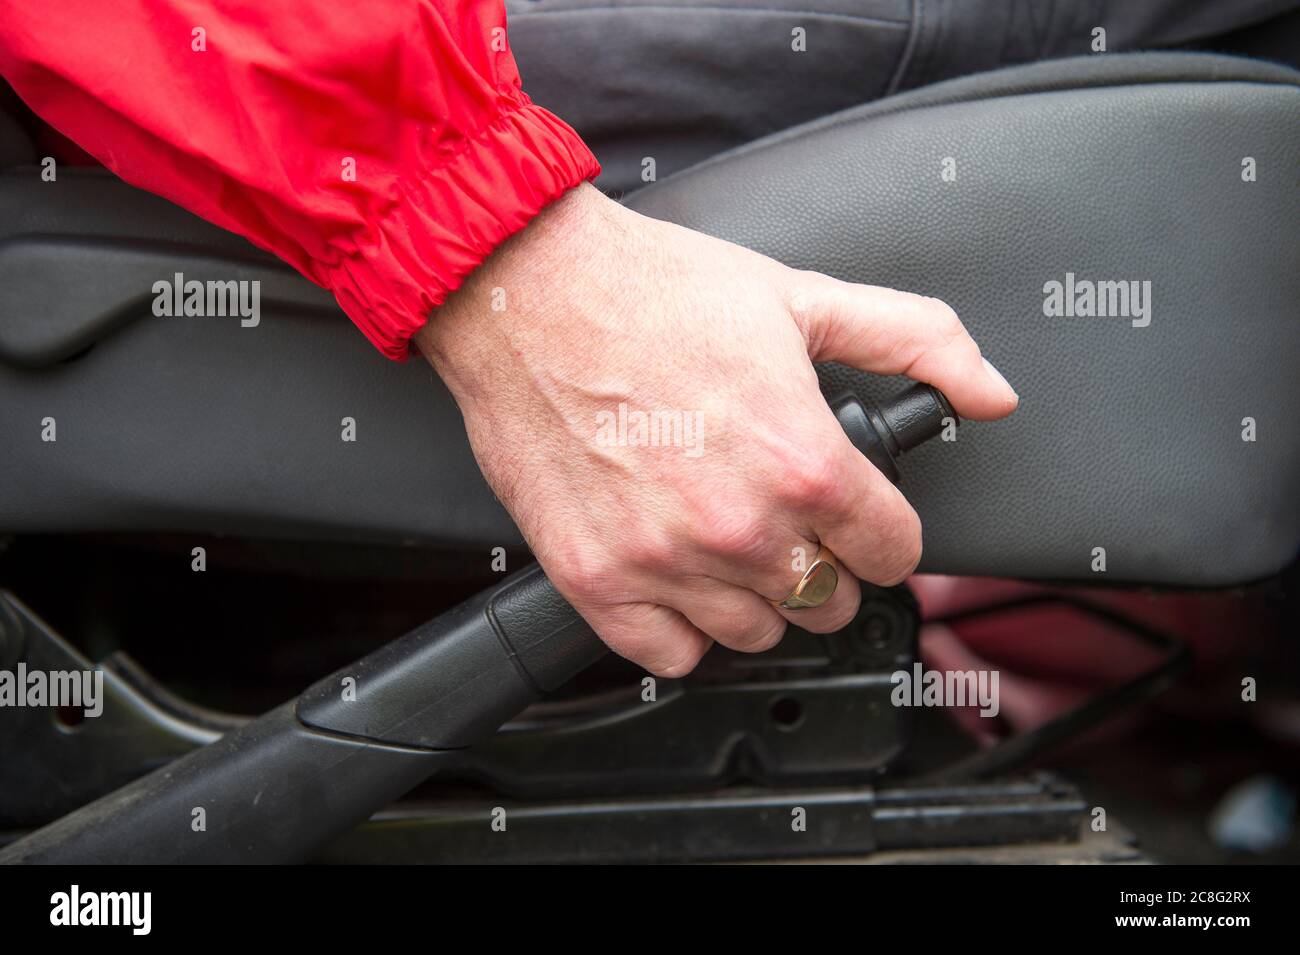 A hand applies a hand brake in a car. Stock Photo